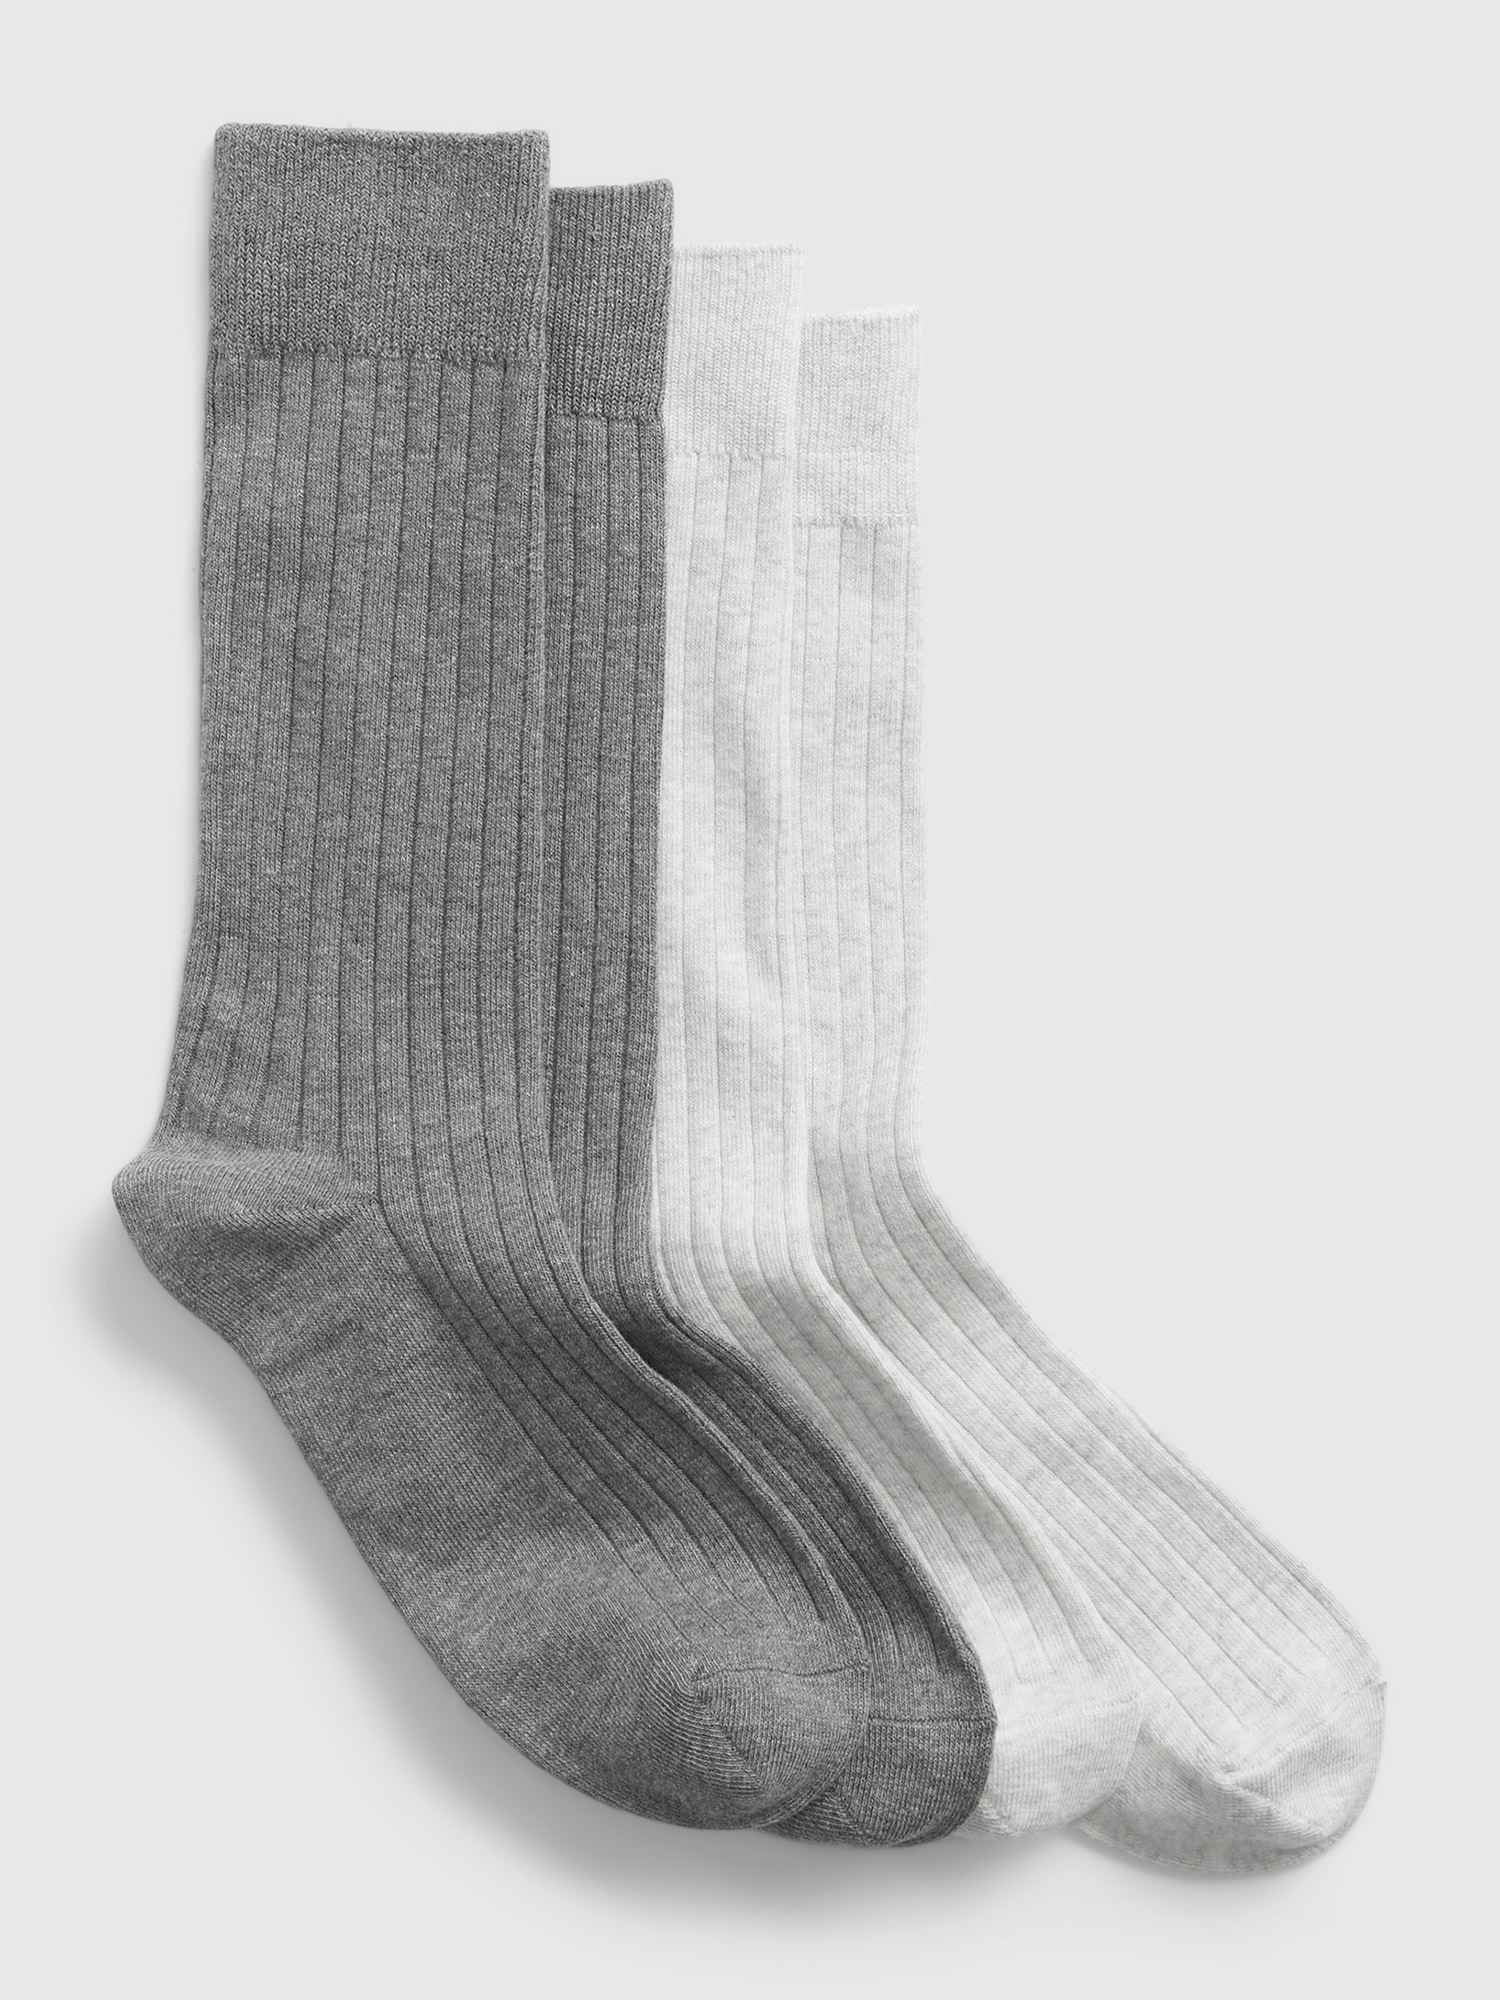 Gap Cotton Dress Socks (2-Pack) gray. 1